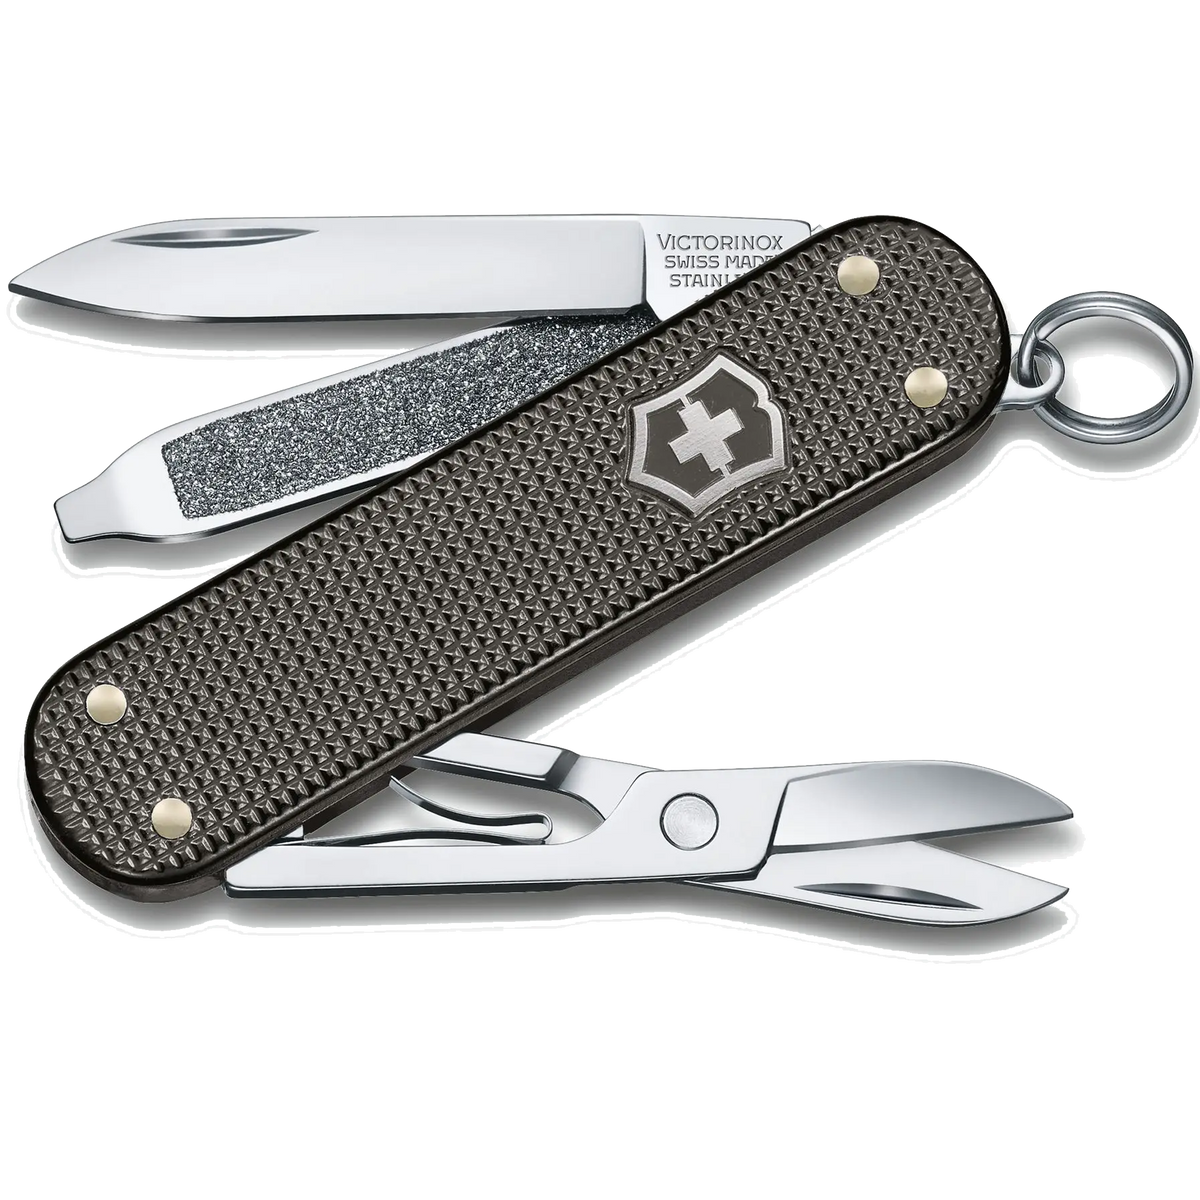 Victorinox - Small Swiss Army Knife - Classic ALOX 2022 Limited Edition